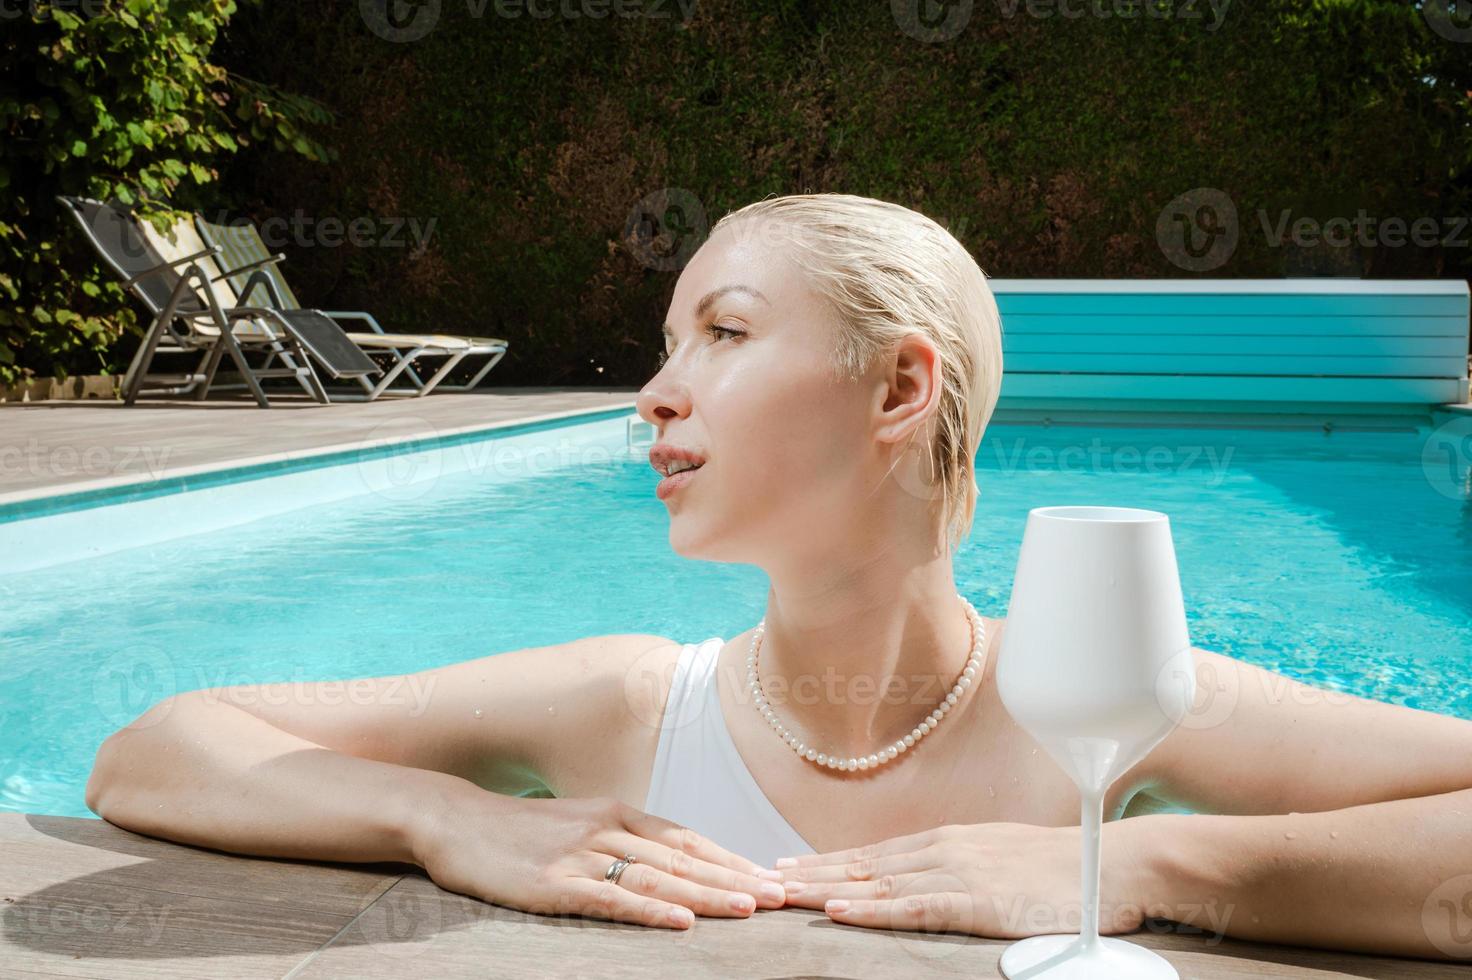 jovem linda garota sexy nadando na piscina privada e relaxando ao sol foto